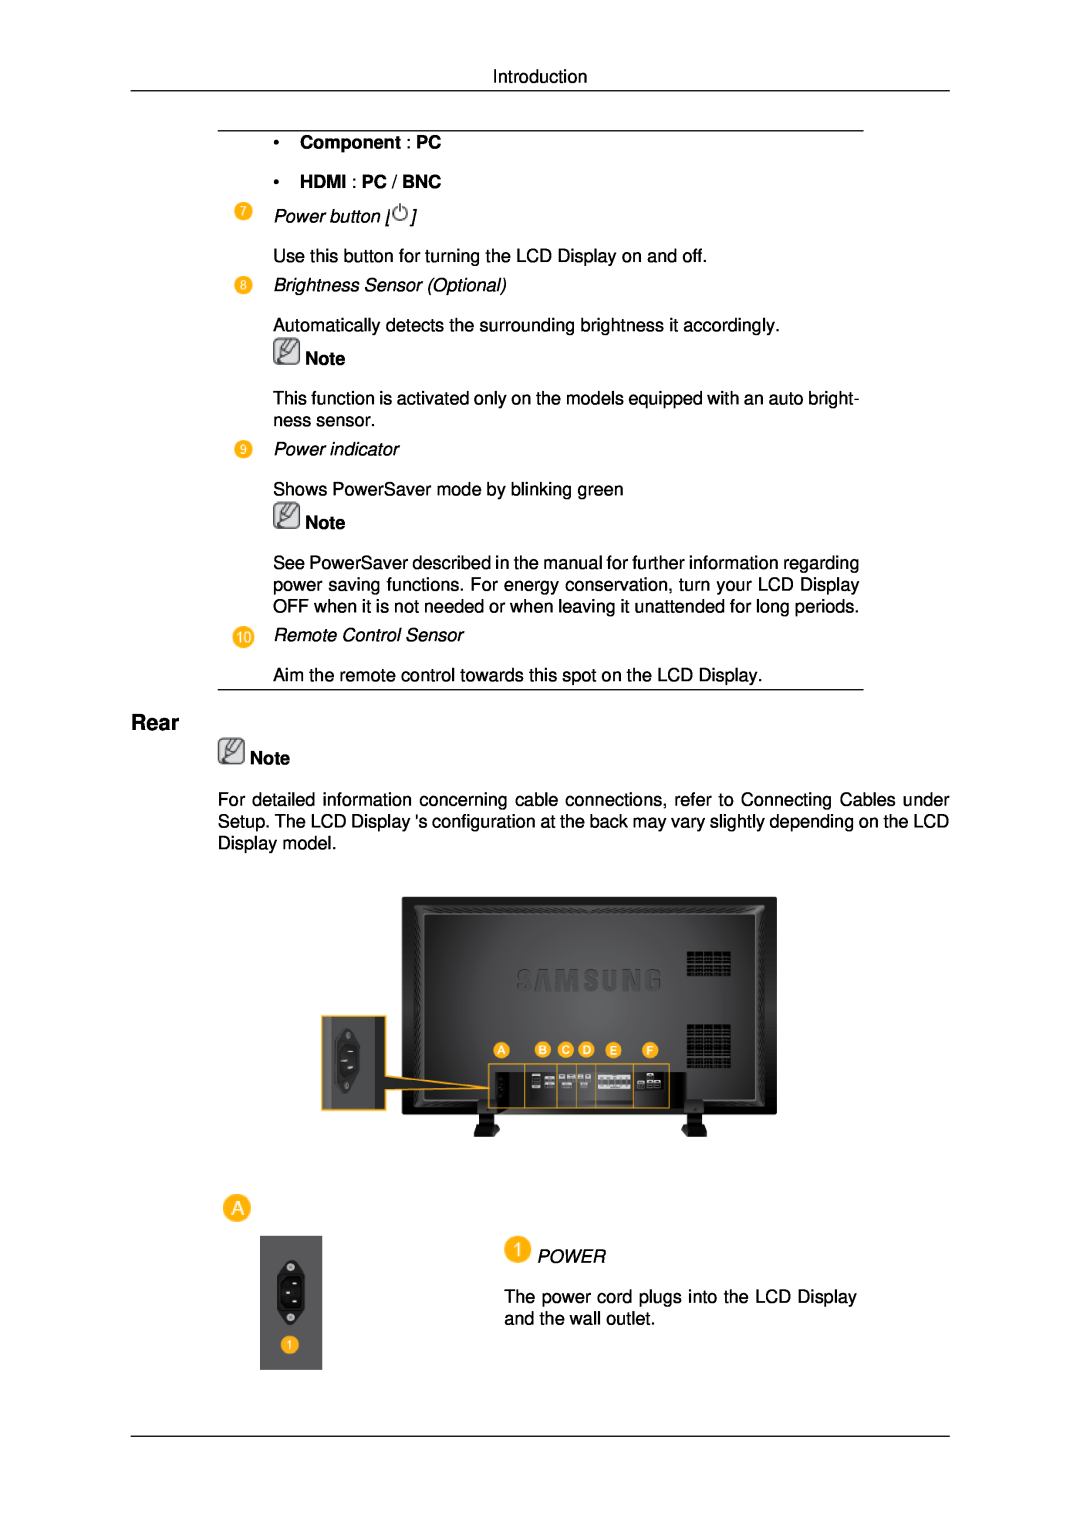 Samsung LH82BVTMBF/XY manual Rear, Component PC HDMI PC / BNC, Power button, Brightness Sensor Optional, Power indicator 